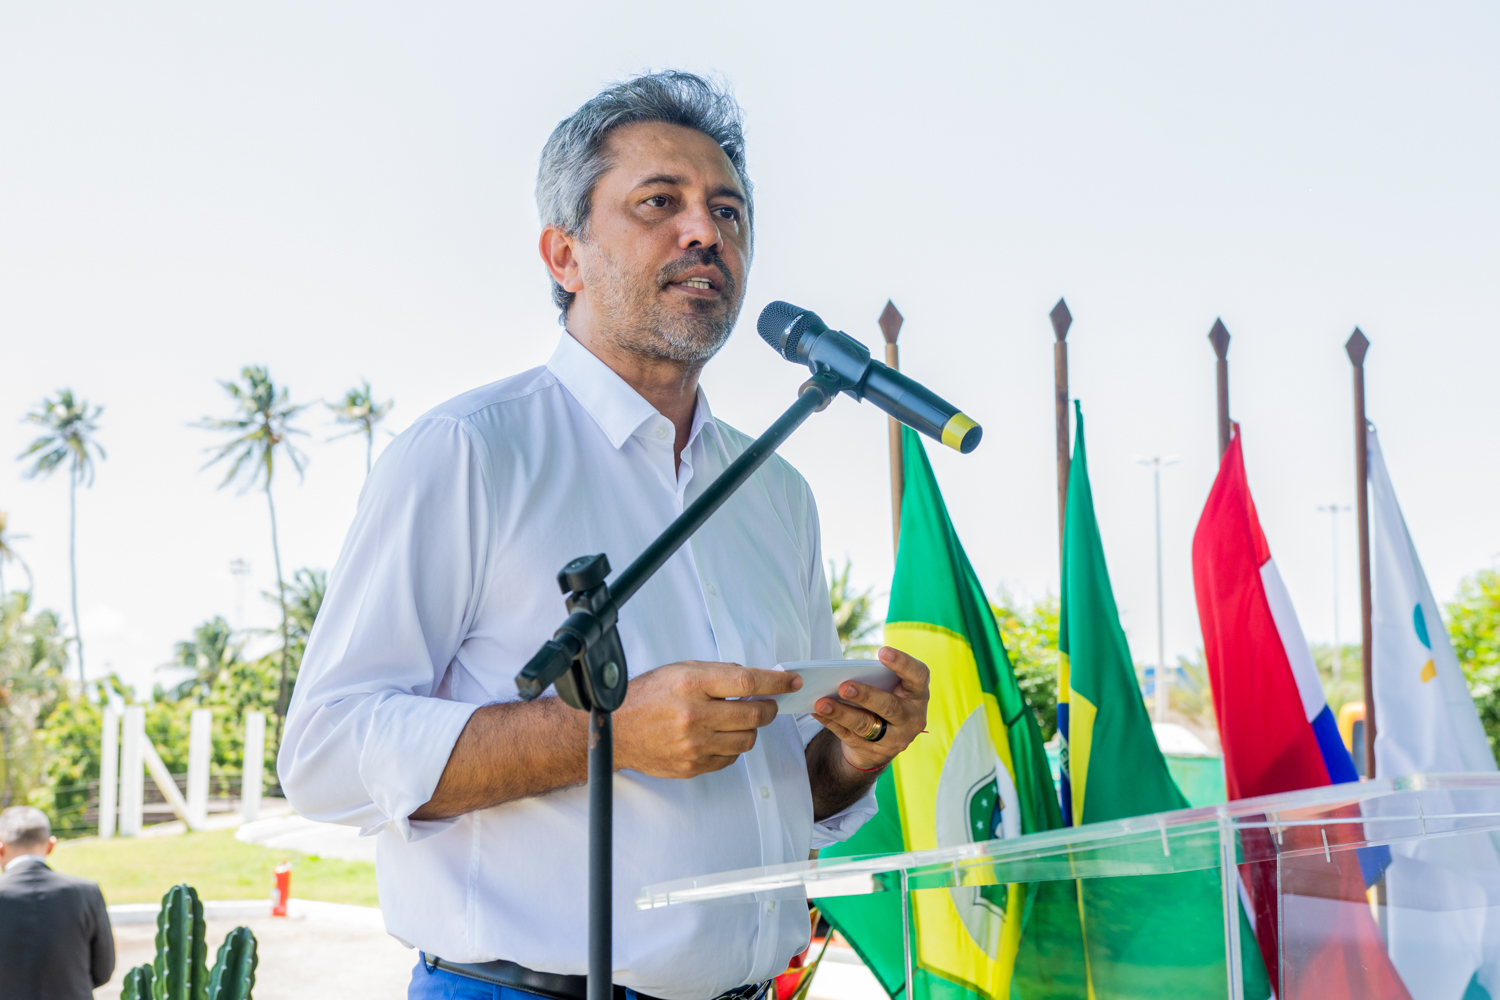 Elmano vai palestar para prefeitos do Ceará nesta terça-feira, 6, no Centro de Eventos